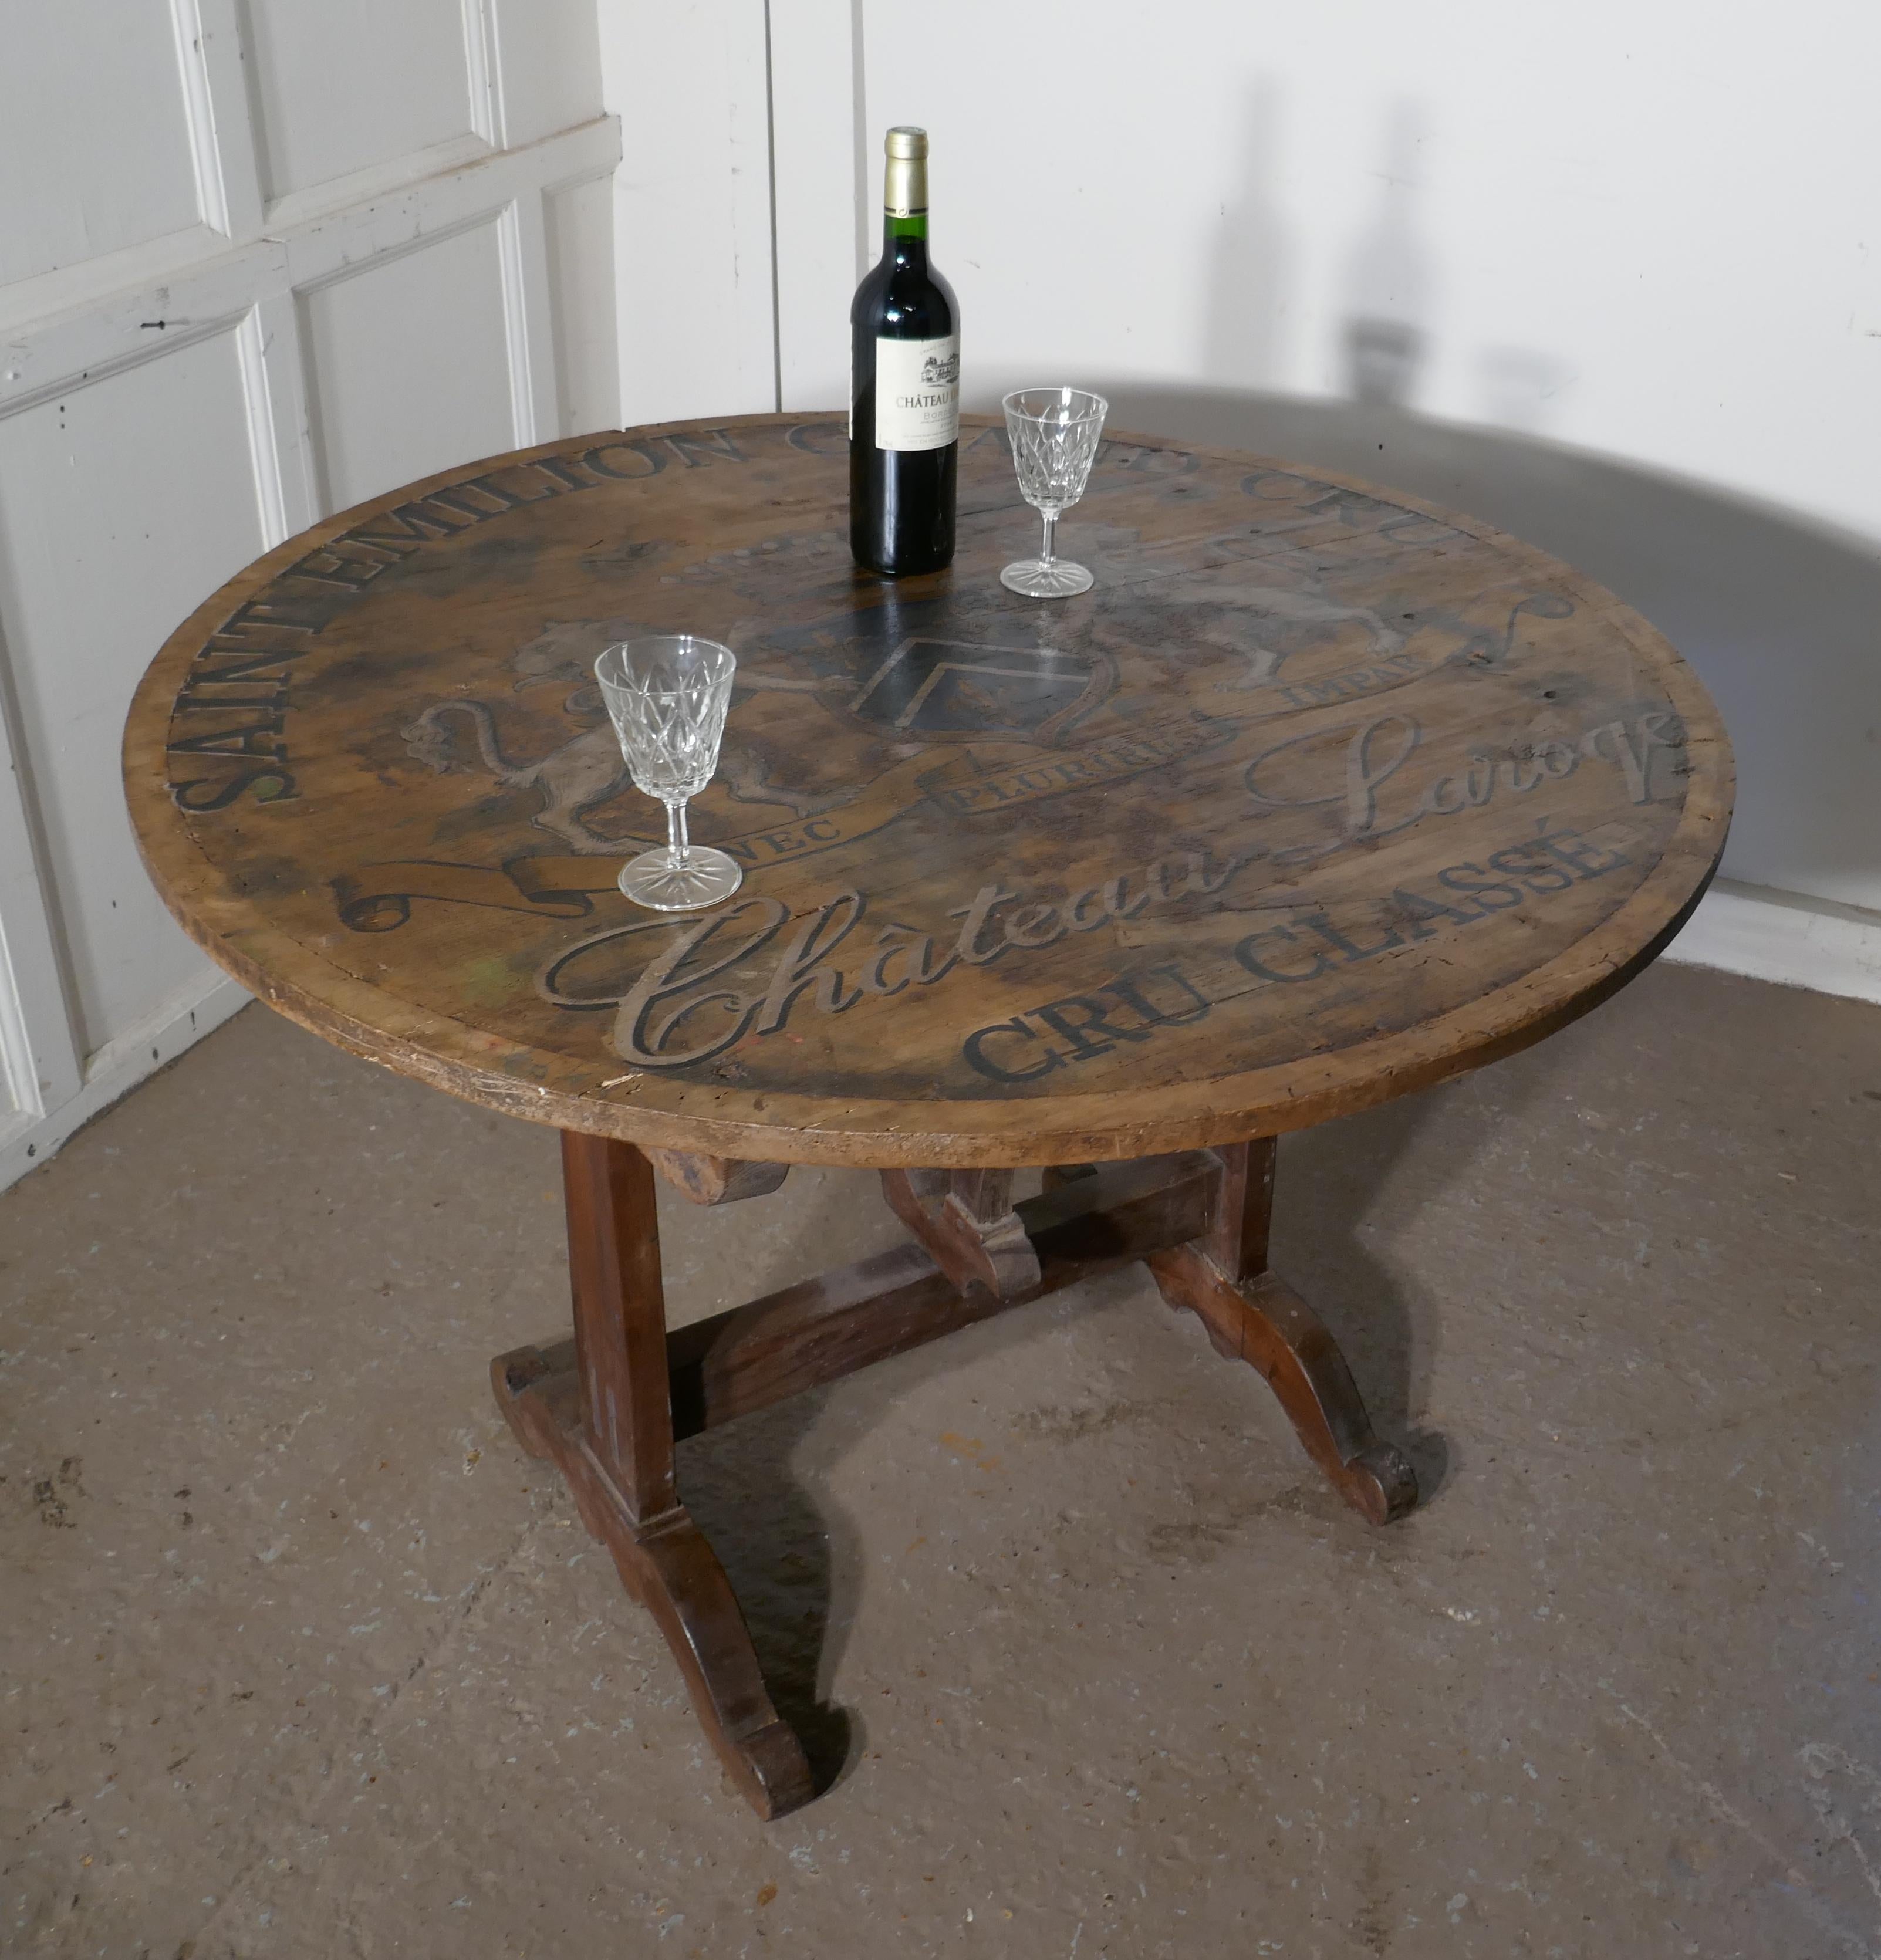 Mid-19th Century 19th Century French Vineyard Wine Table from Chateau Laroge, Saint Emilion